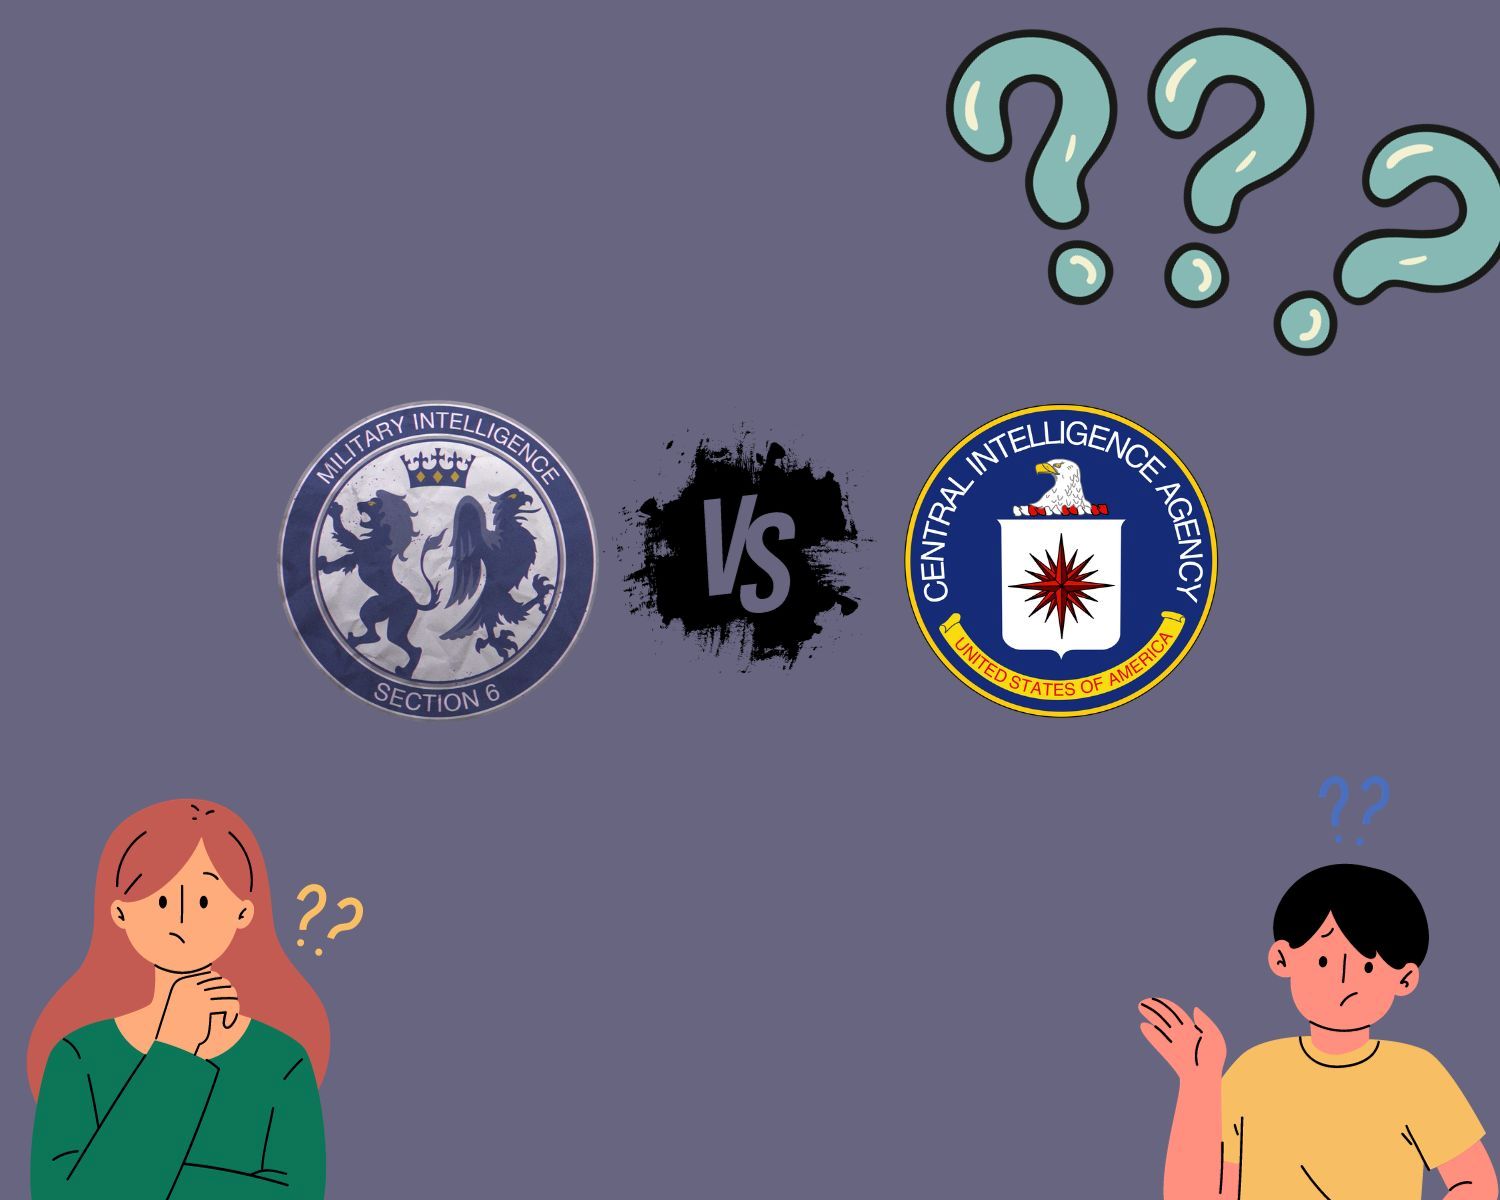 MI6 Vs CIA: Which Secret Intelligence Agency Reigns Supreme?